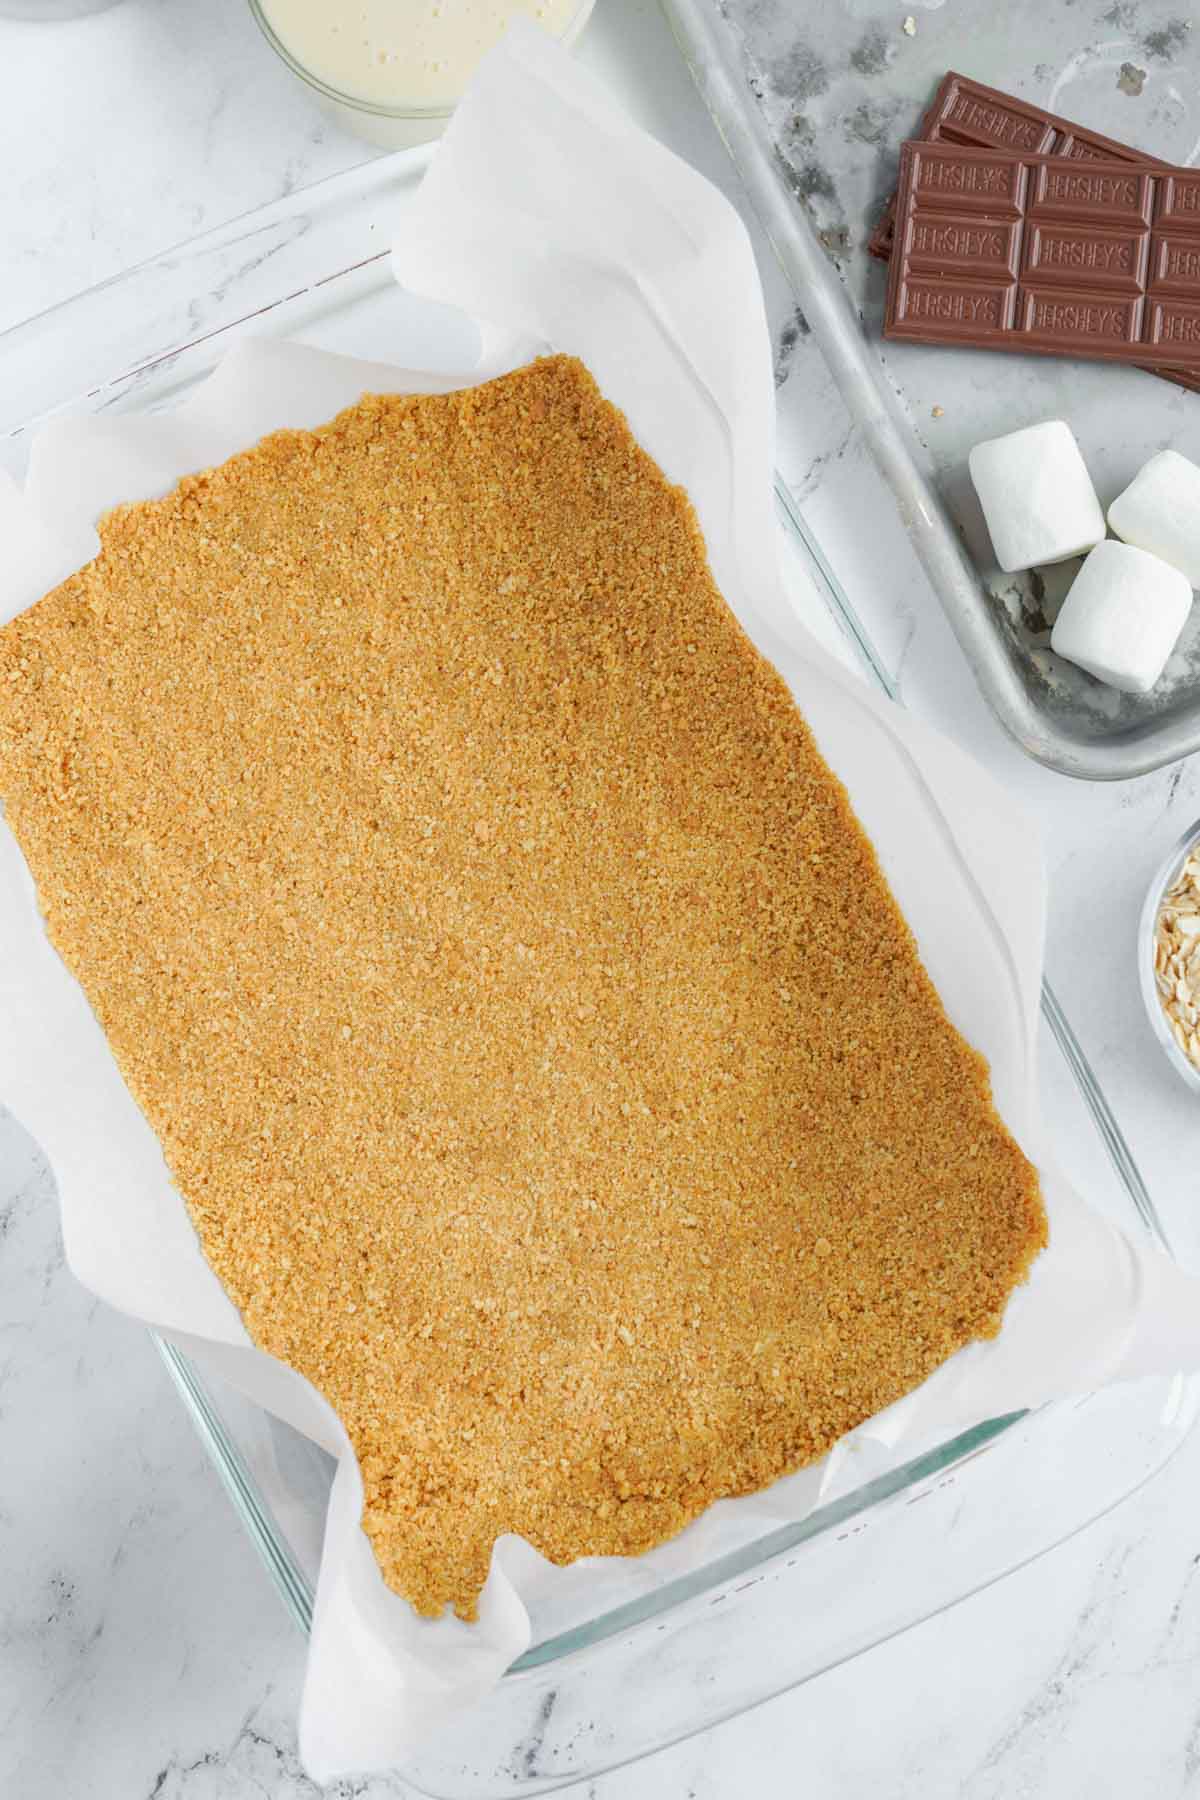 graham cracker crumb crust in a baking pan